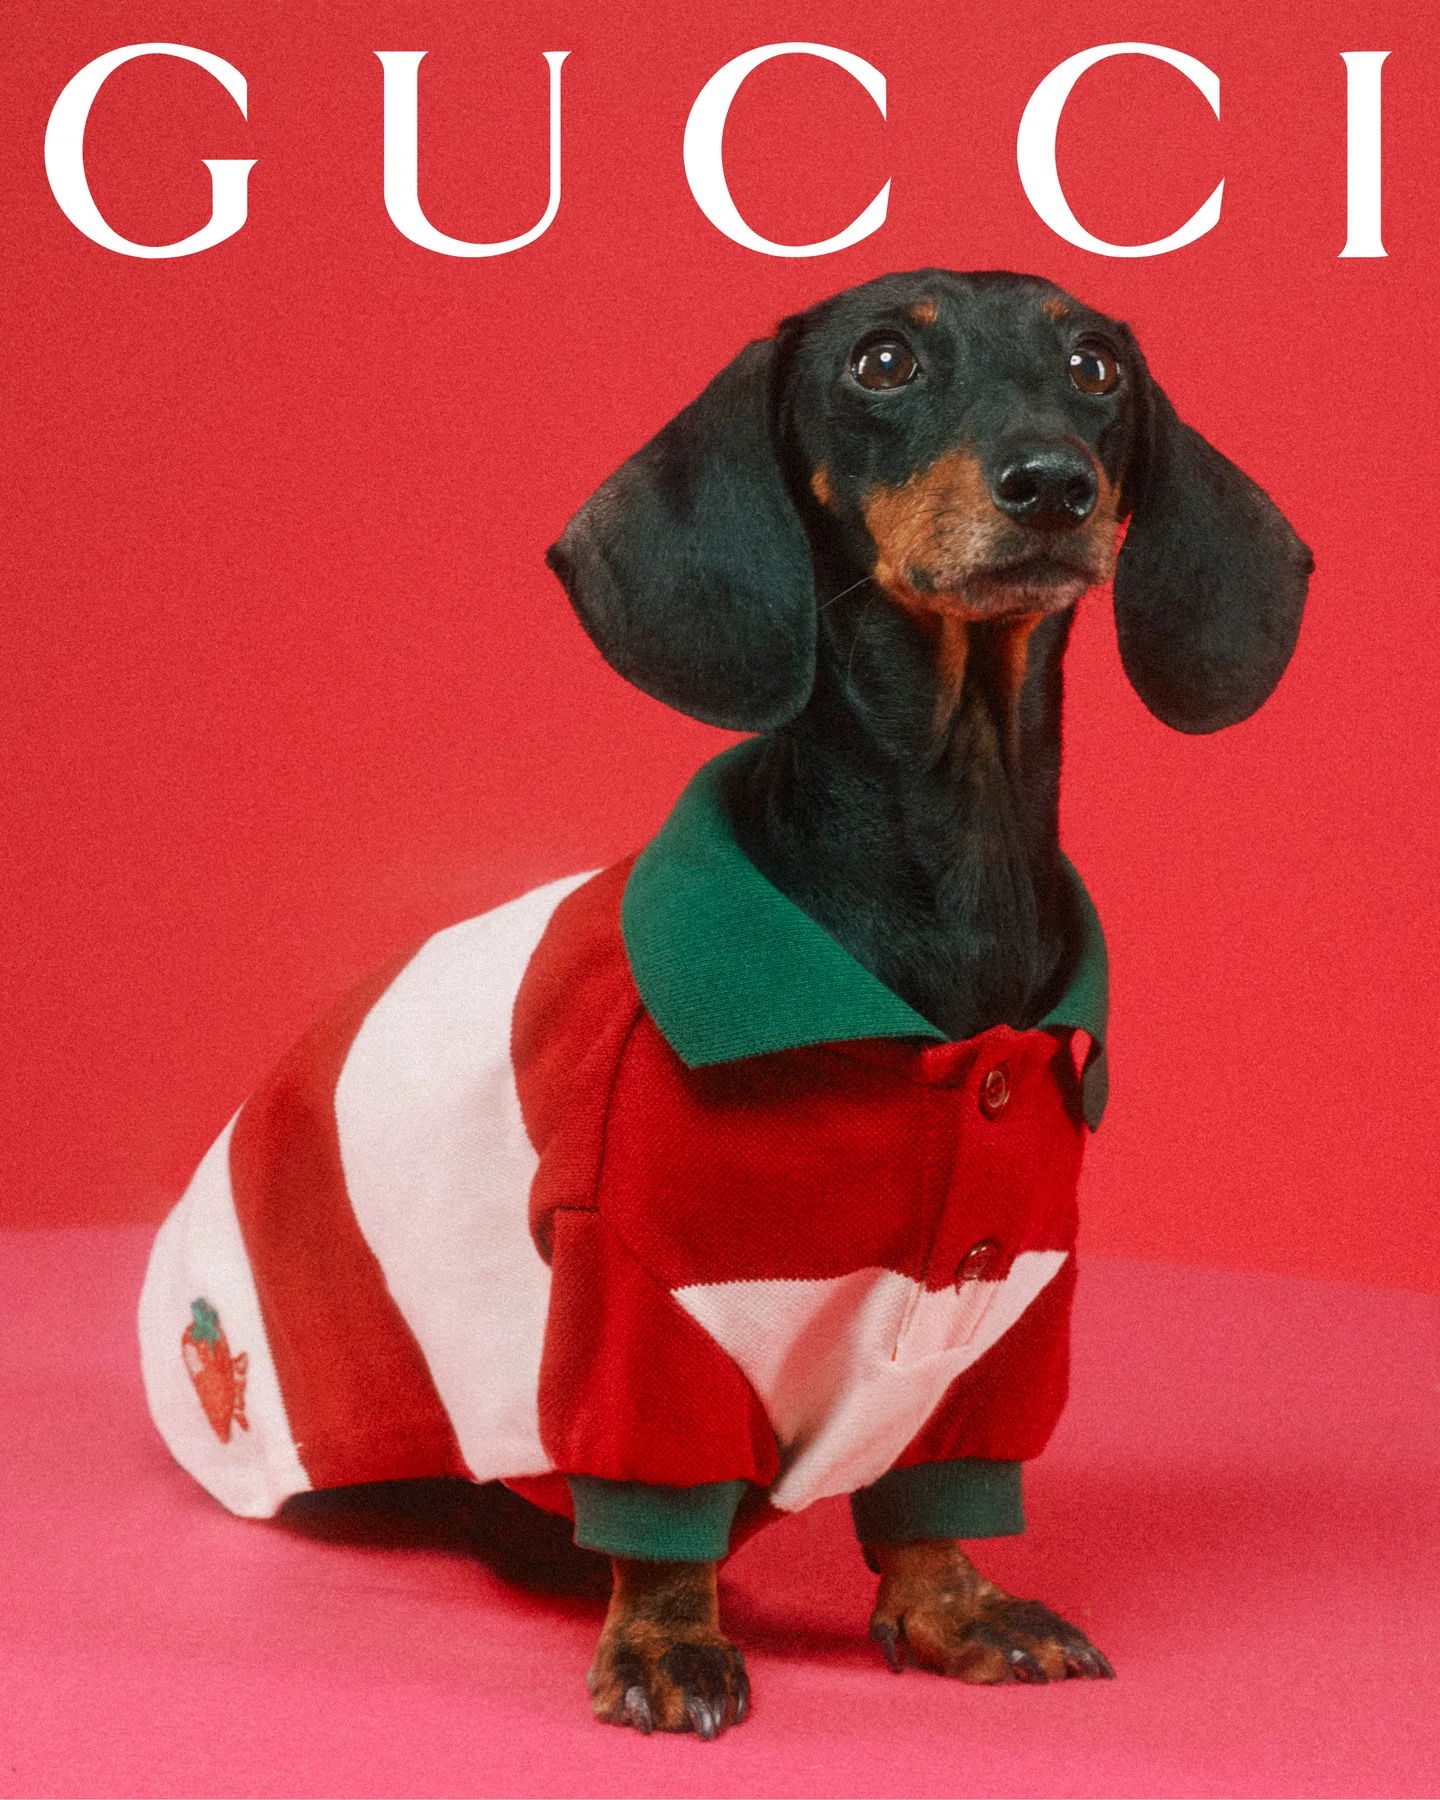 It's Gucci #dogs #gucci #pets #meme #fashion #fashionblogger #shorts  #shorstviral #dogs #funny 